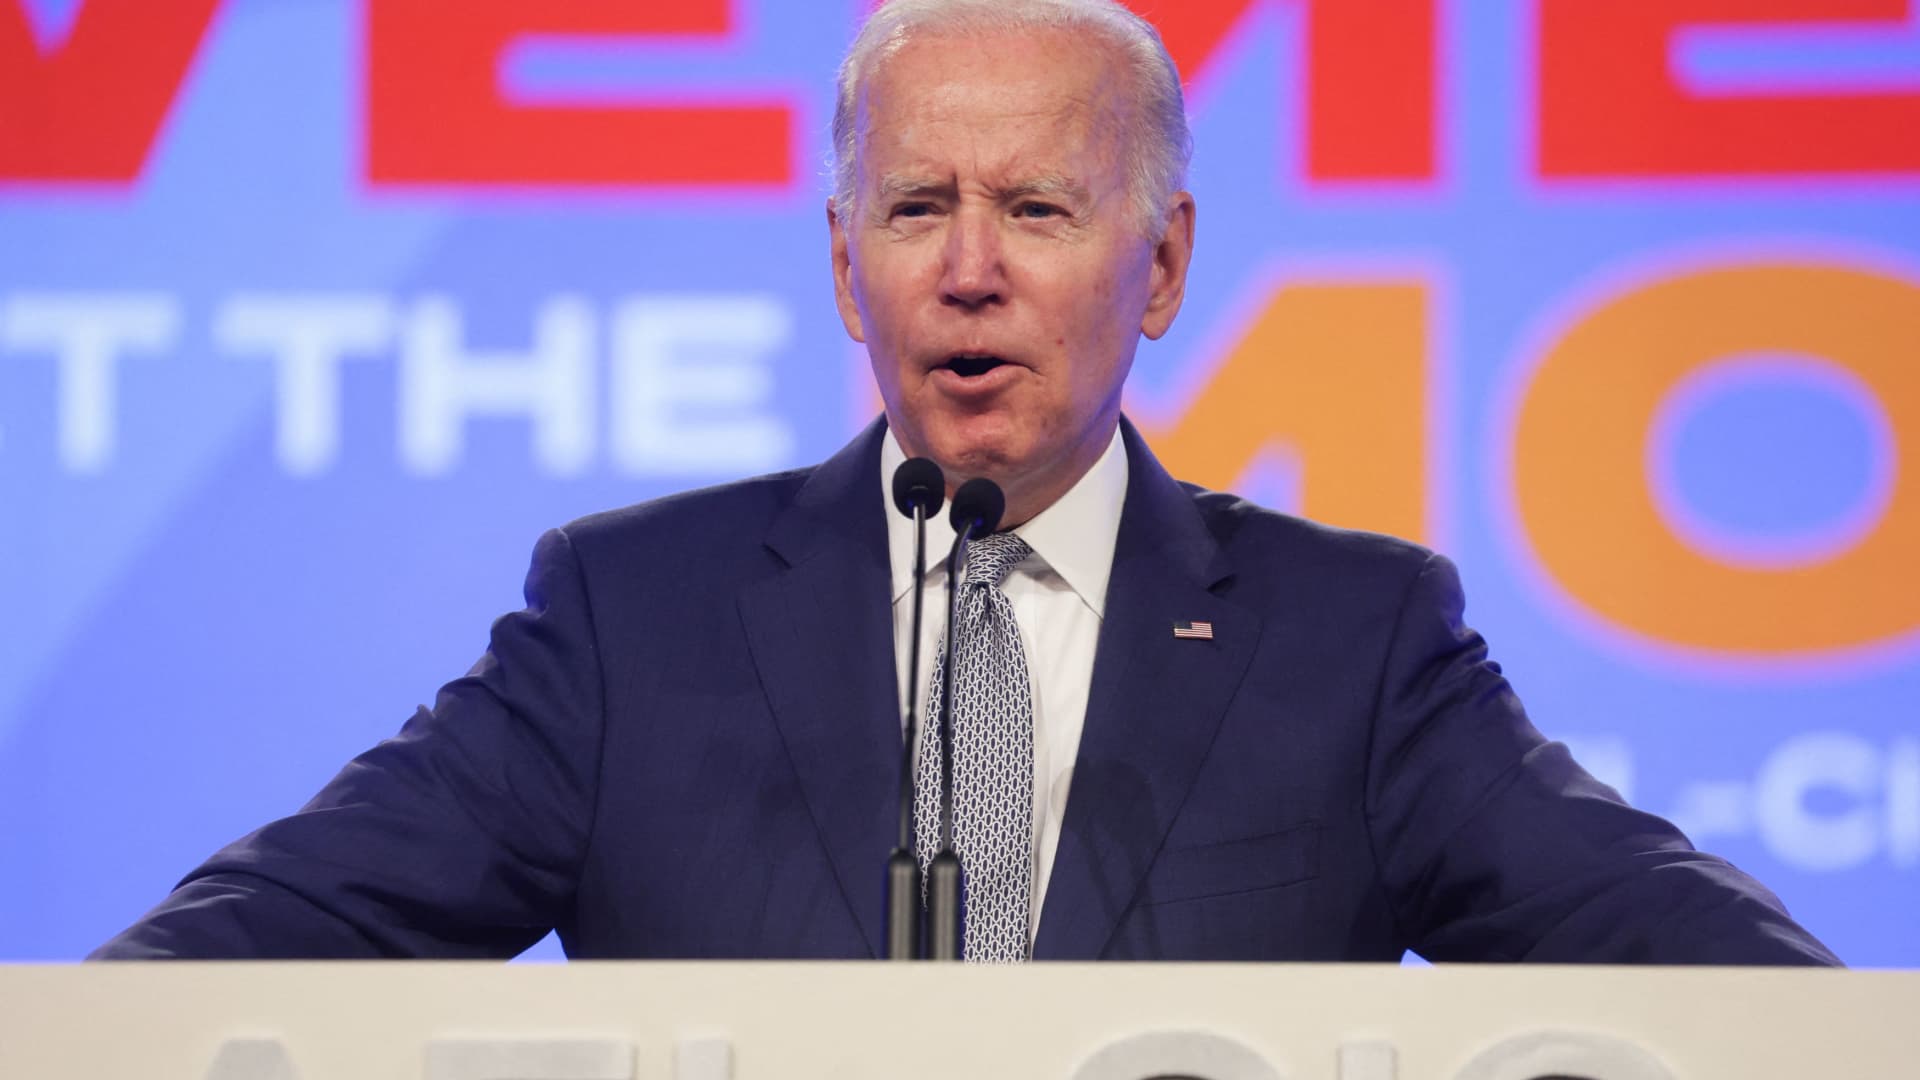 U.S. President Joe Biden delivers remarks at the 29th AFL-CIO Quadrennial Constitutional Convention at the Pennsylvania Convention Center in Philadelphia, U.S., June 14, 2022. 